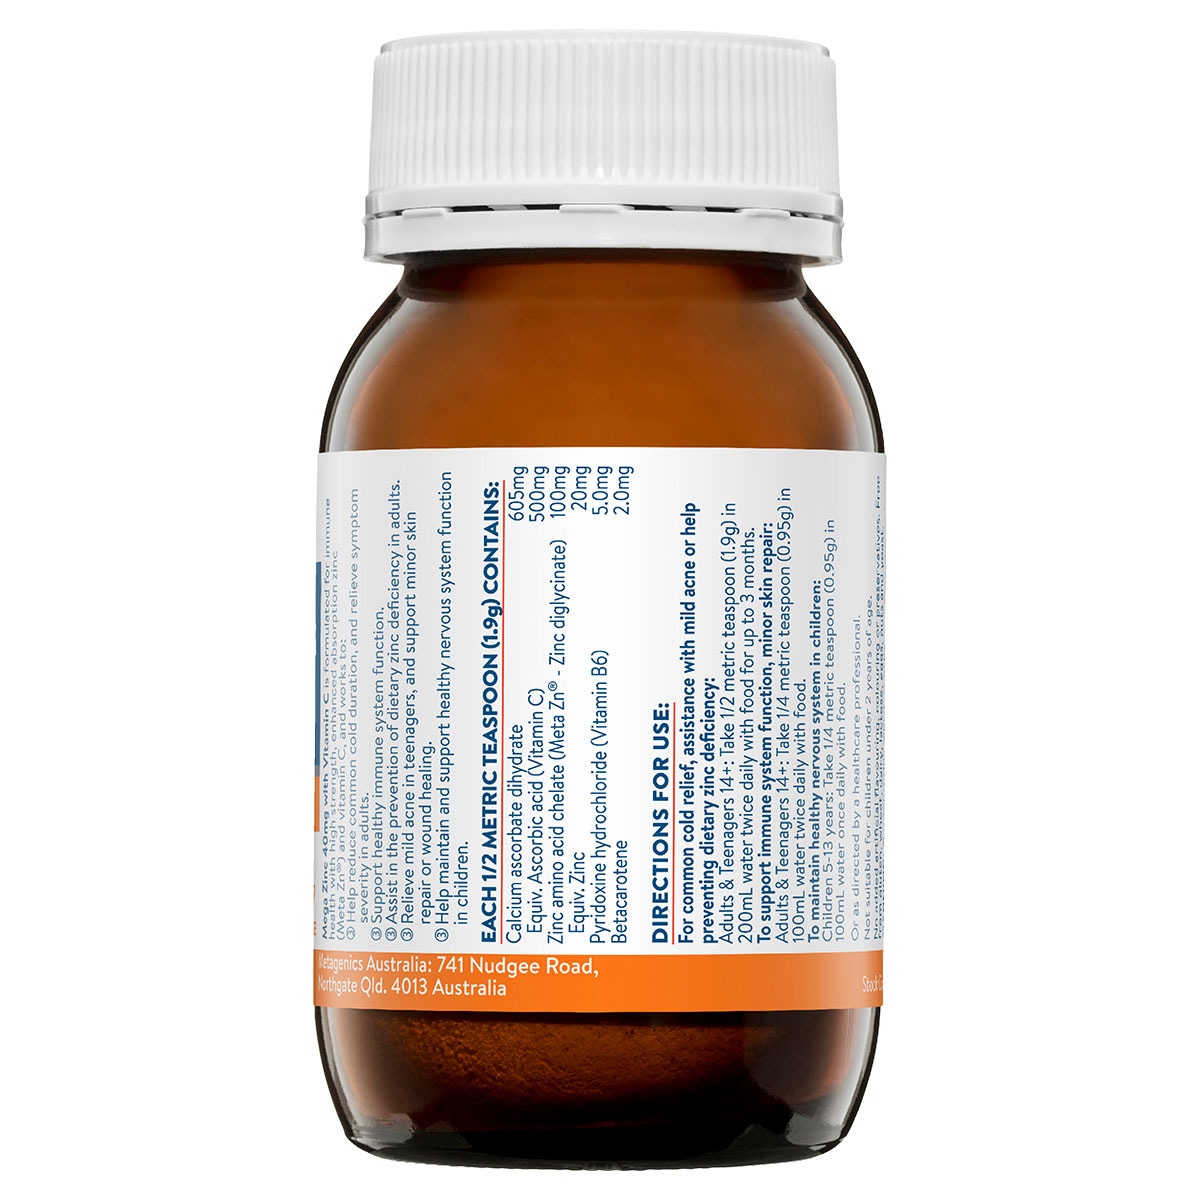 Ethical Nutrients Mega Zinc 40mg with Vitamin C Orange 95g Powder